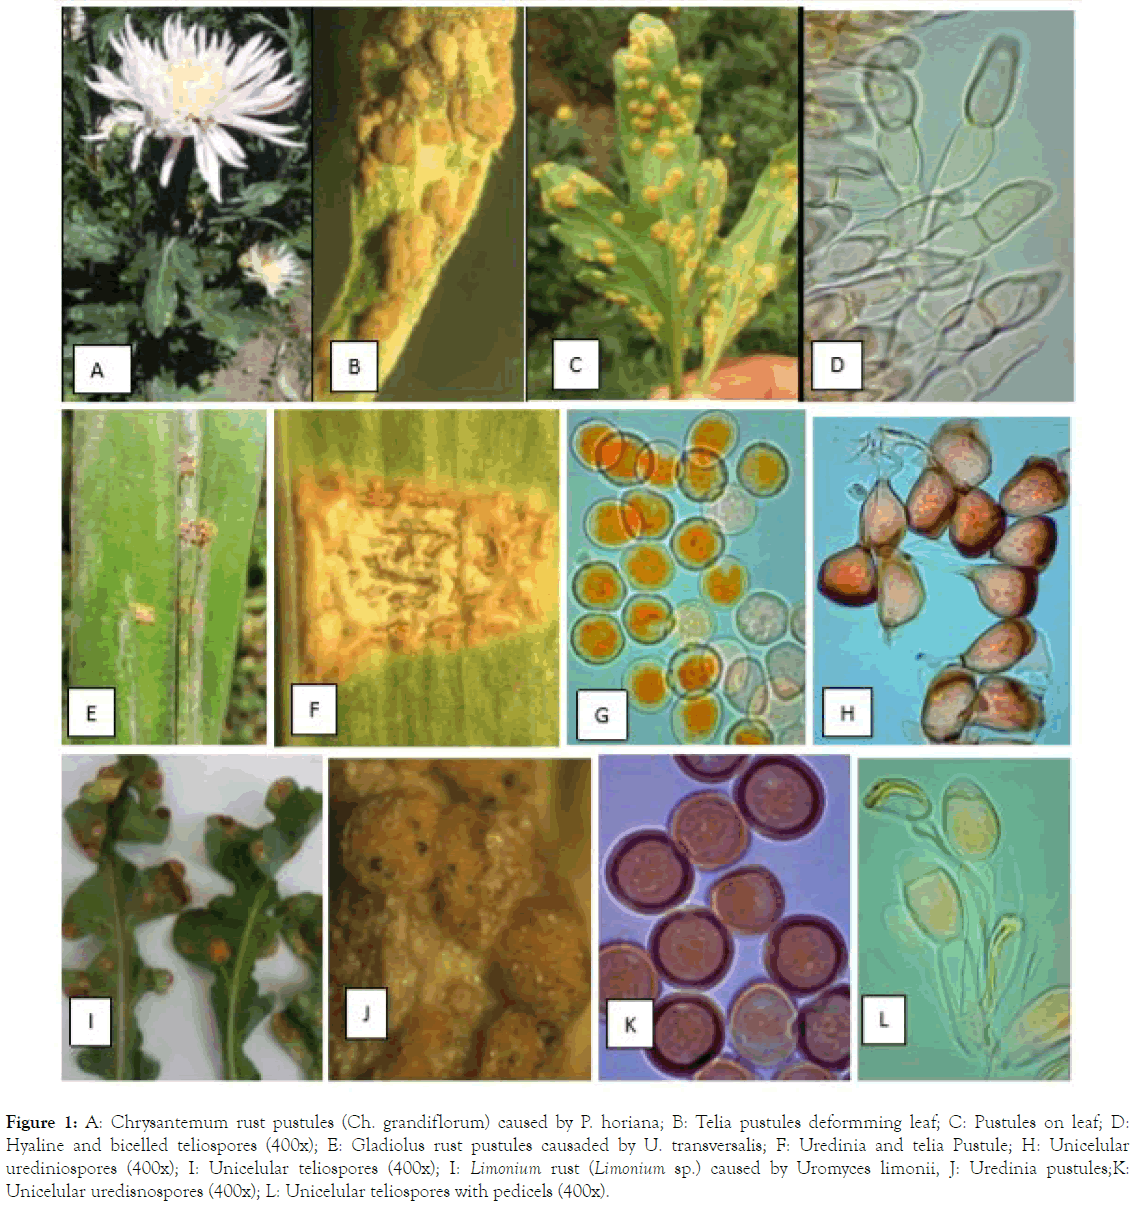 plant-pathology-microbiology-chrysantemum-rust-pustules